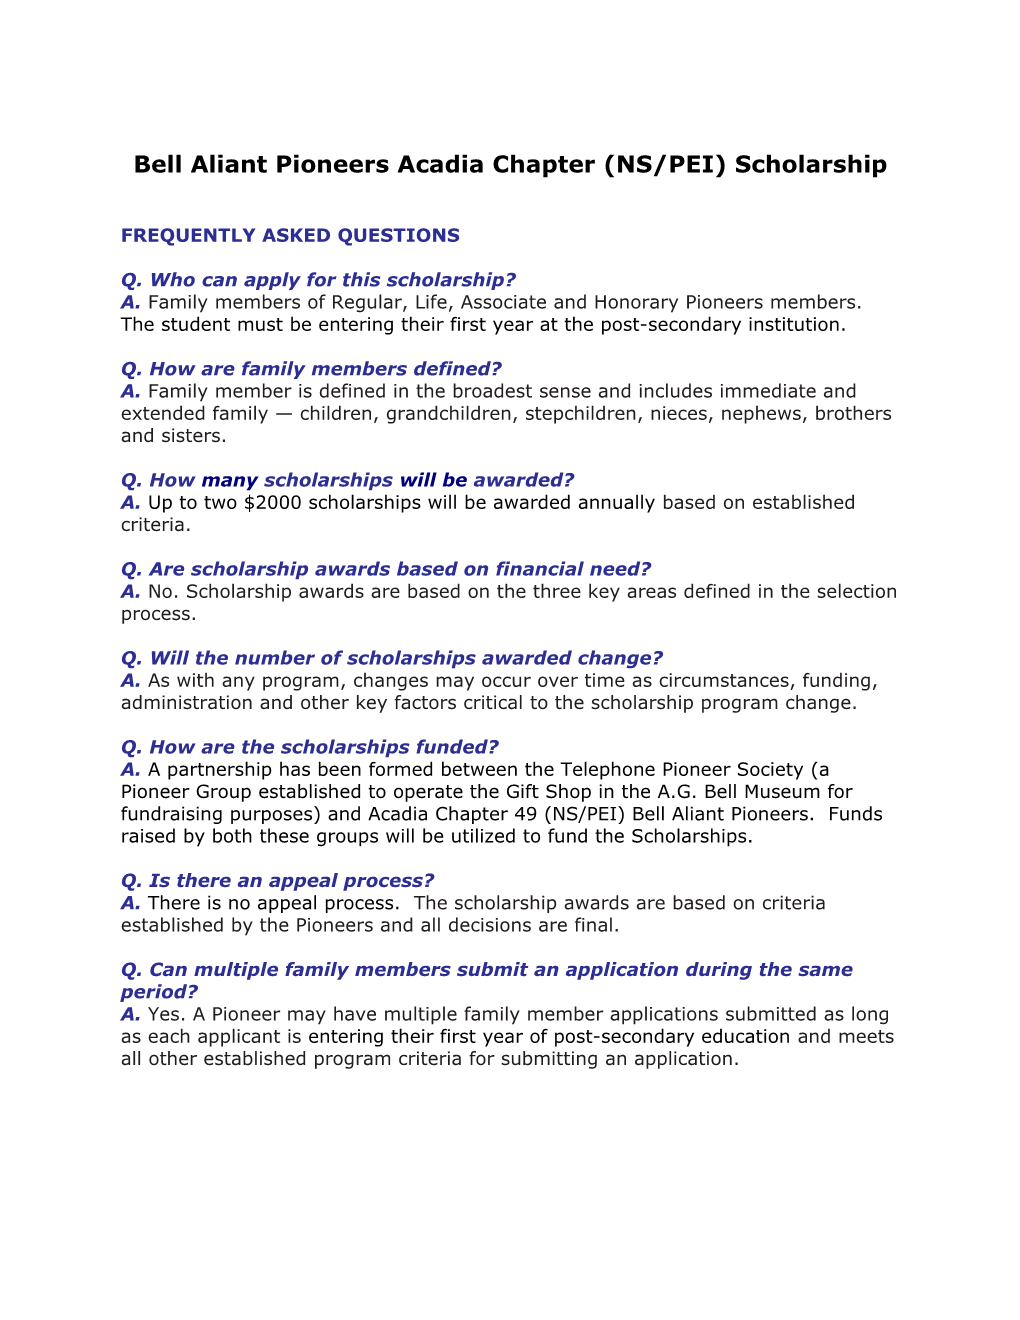 Telephone Pioneer Society/Acadia Chapter 49 (NS/PEI) Bell Aliant Pioneers Scholarship Program